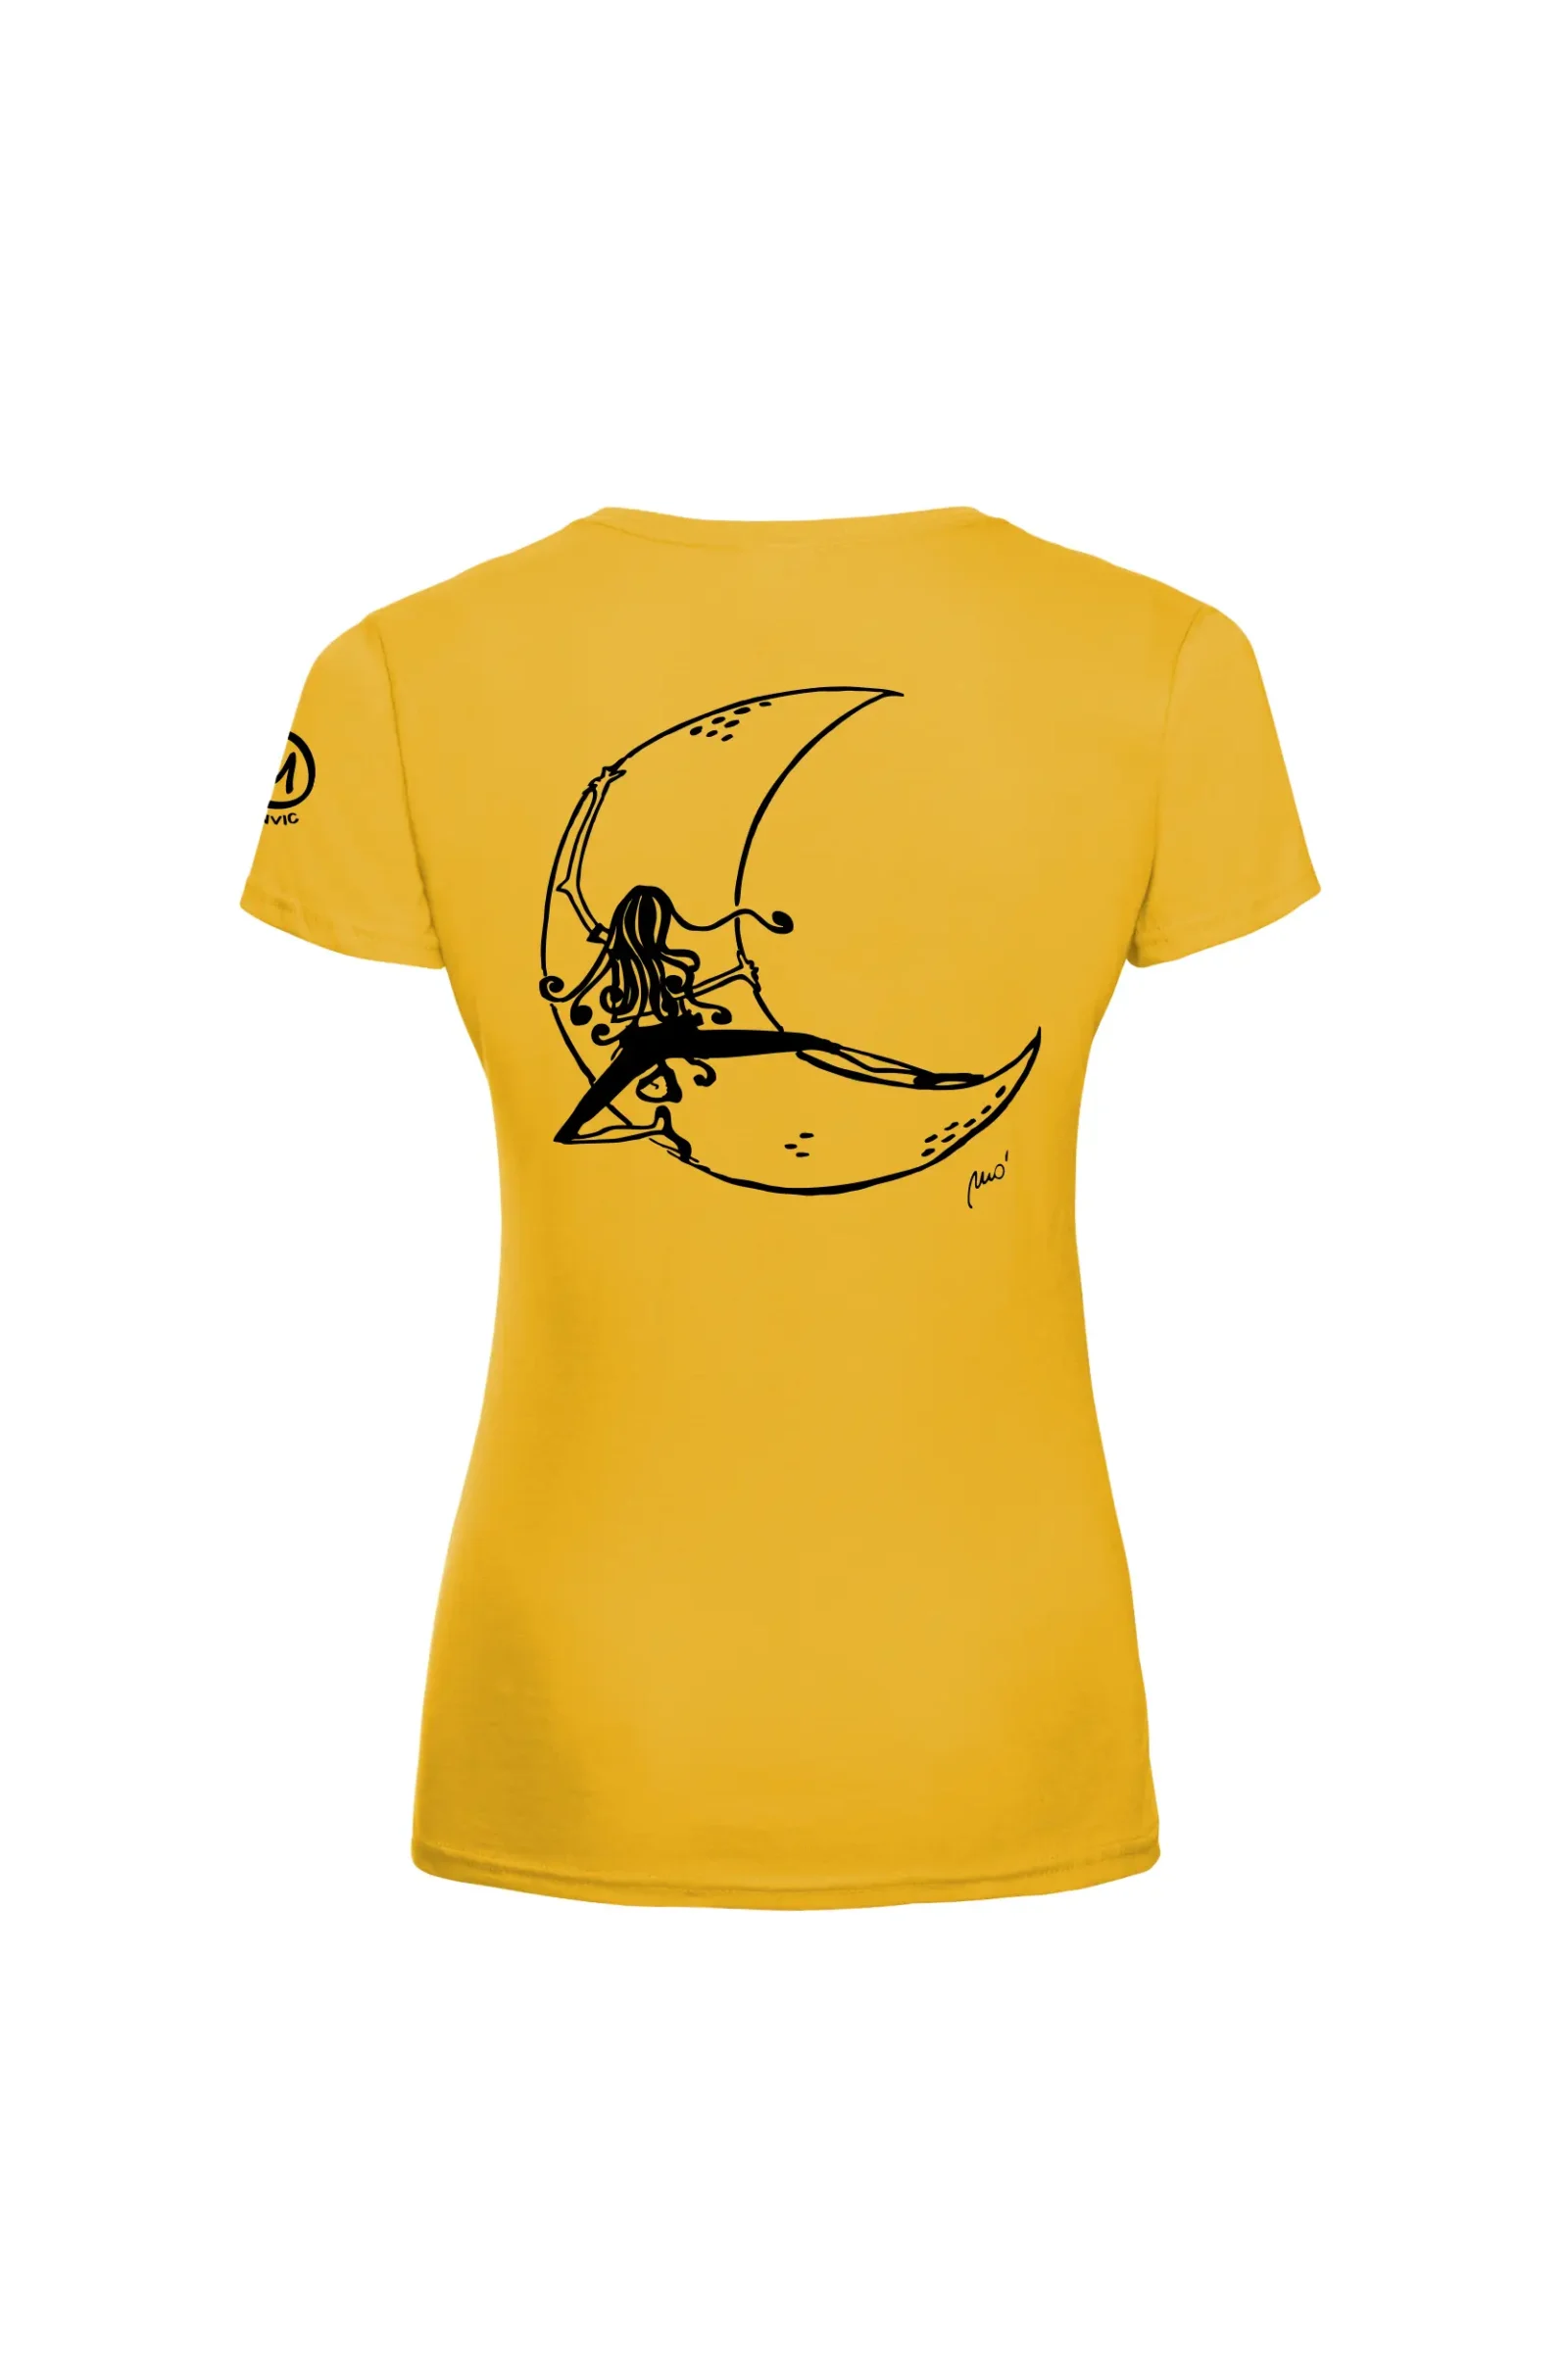 T-shirt escalade femme - coton jaune - graphisme "Lune" - SHARON by MONVIC